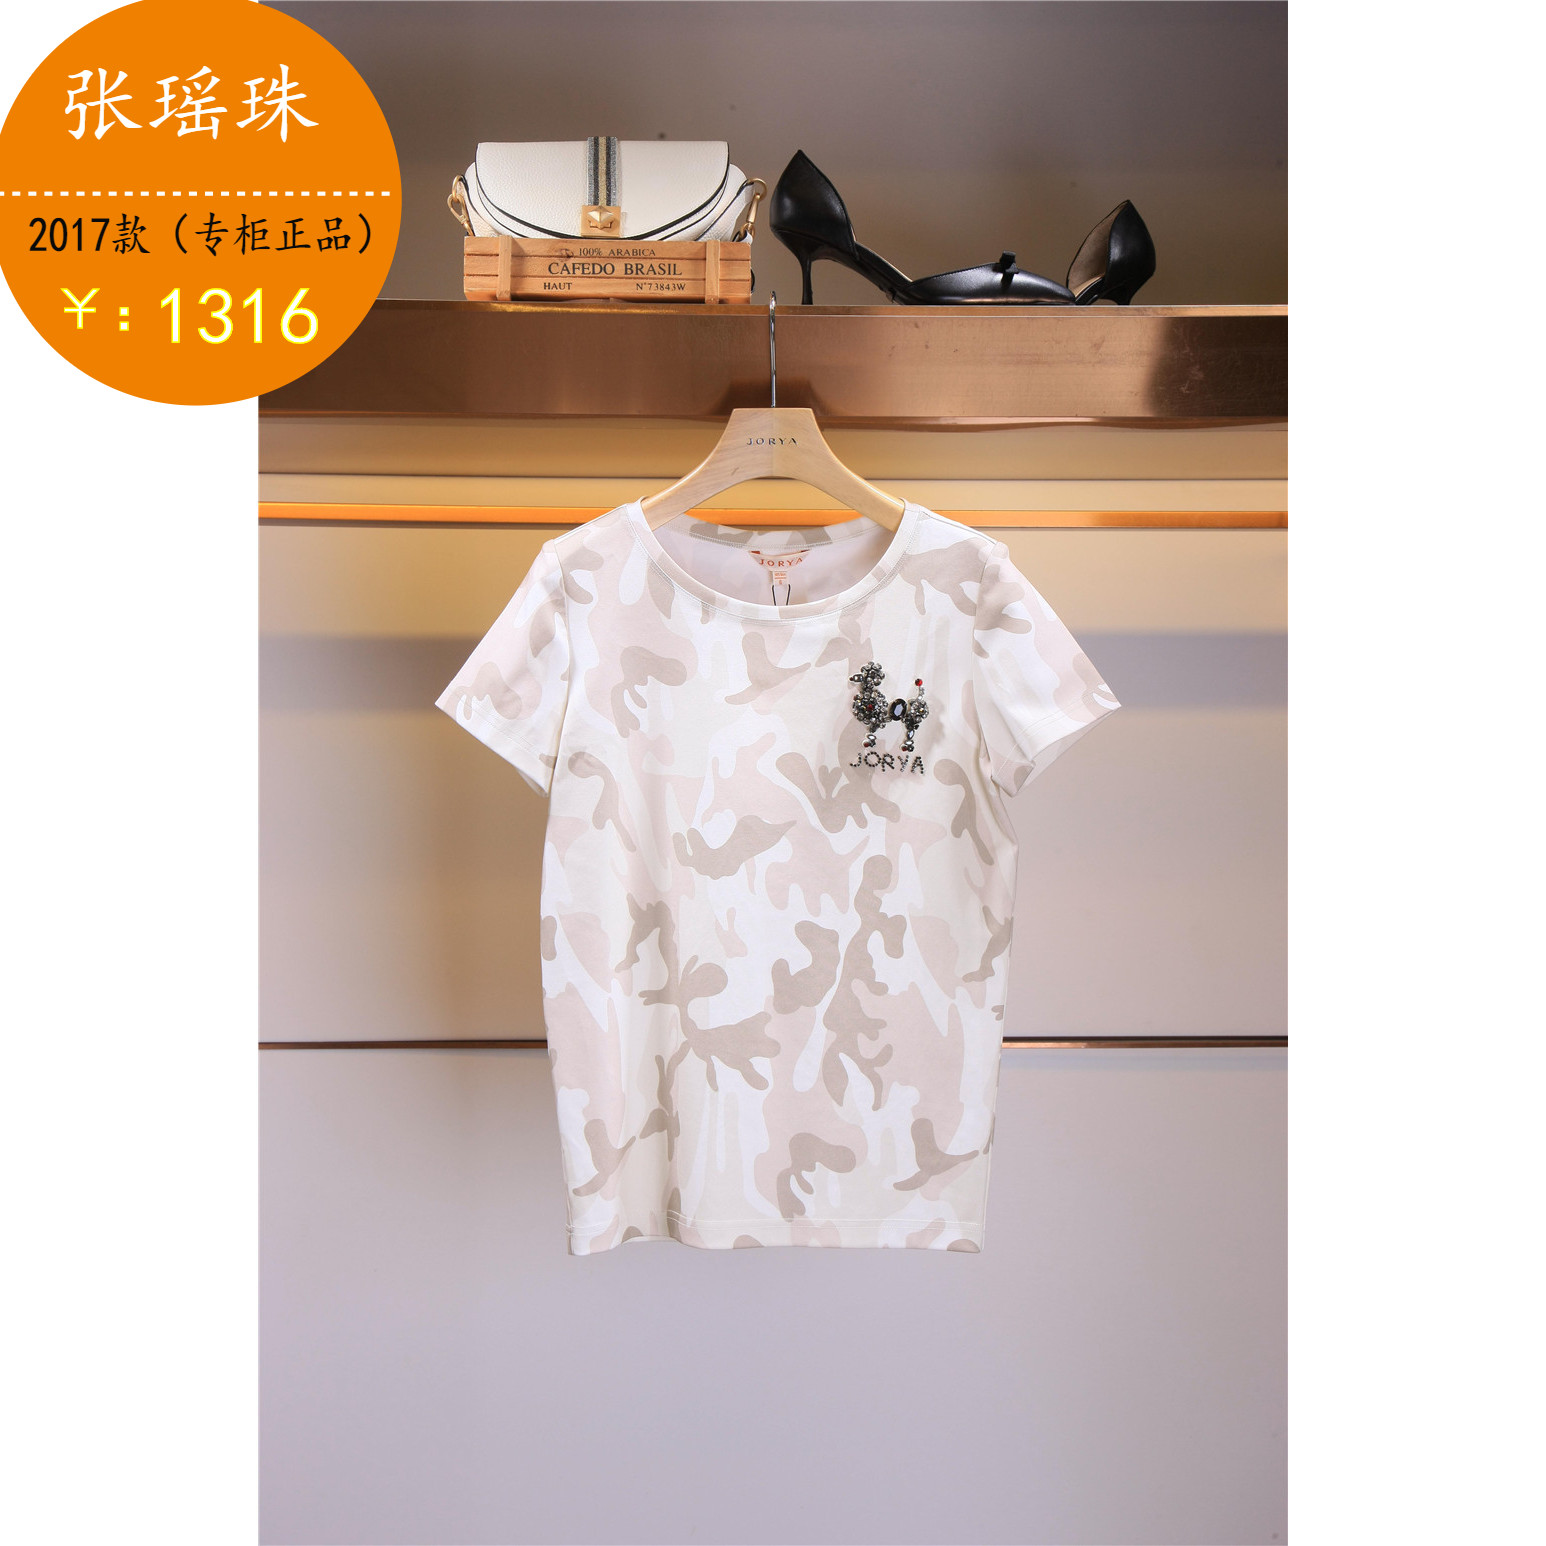 Jorya/卓雅 2017夏款 7折 专柜正品 J1203702T恤1880